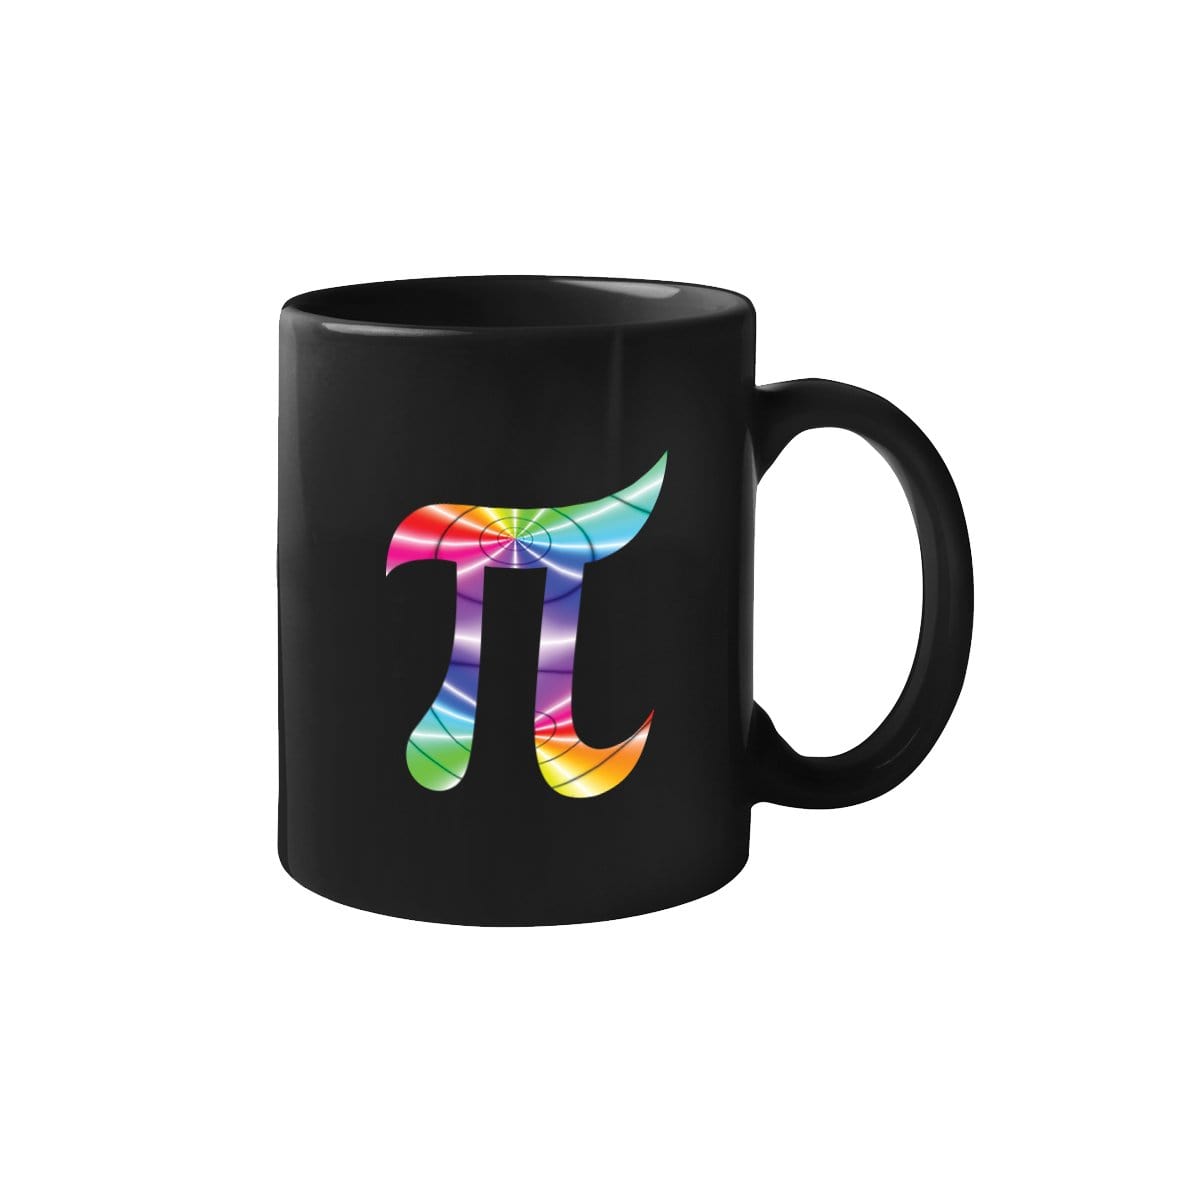 Pi complex domain - DrT - Mug